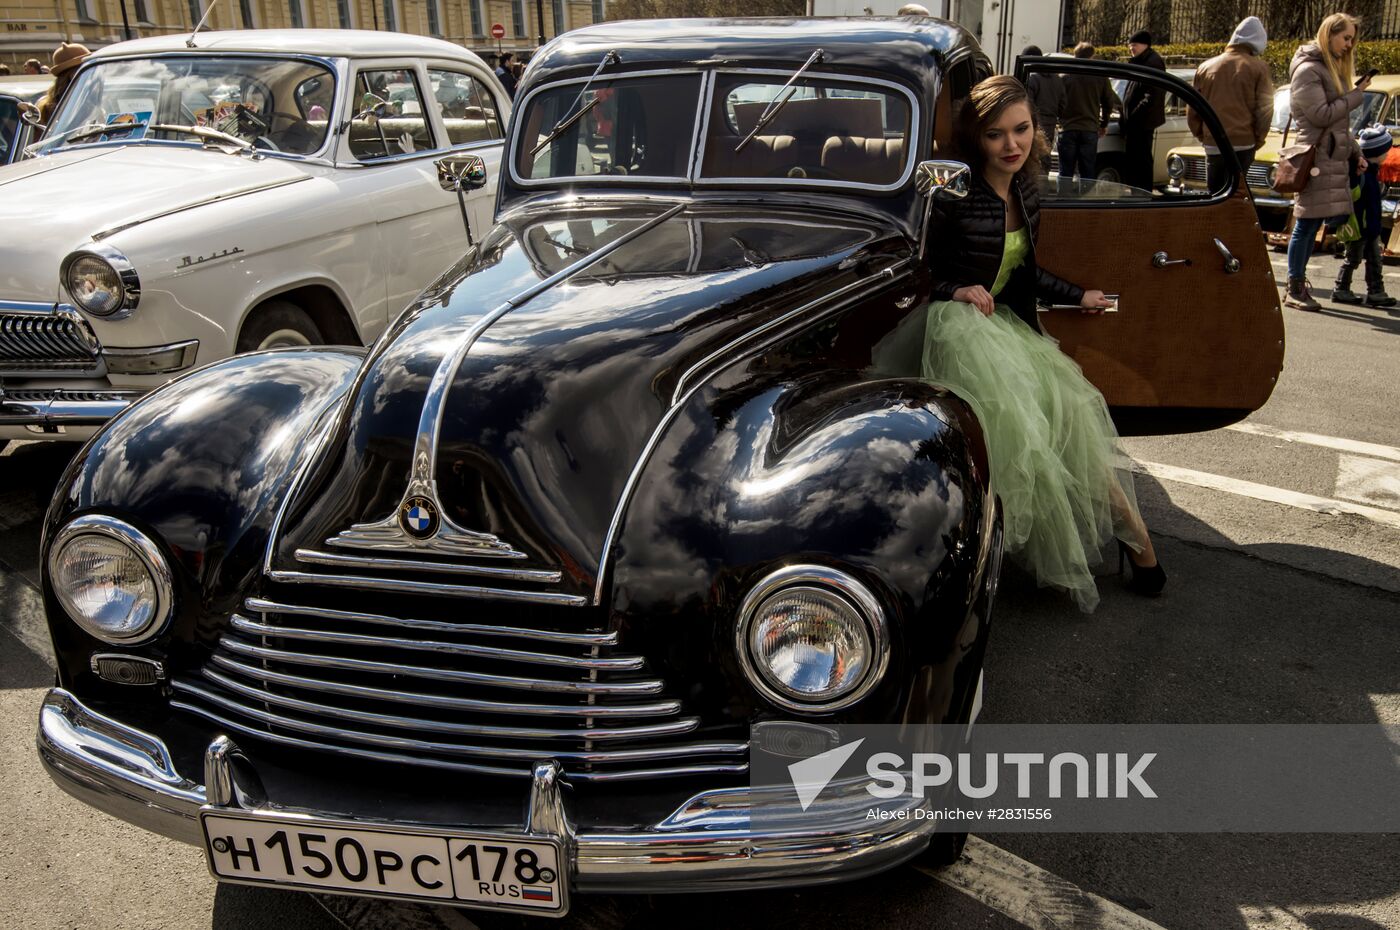 Vintage cars exhibition in St. Petersburg